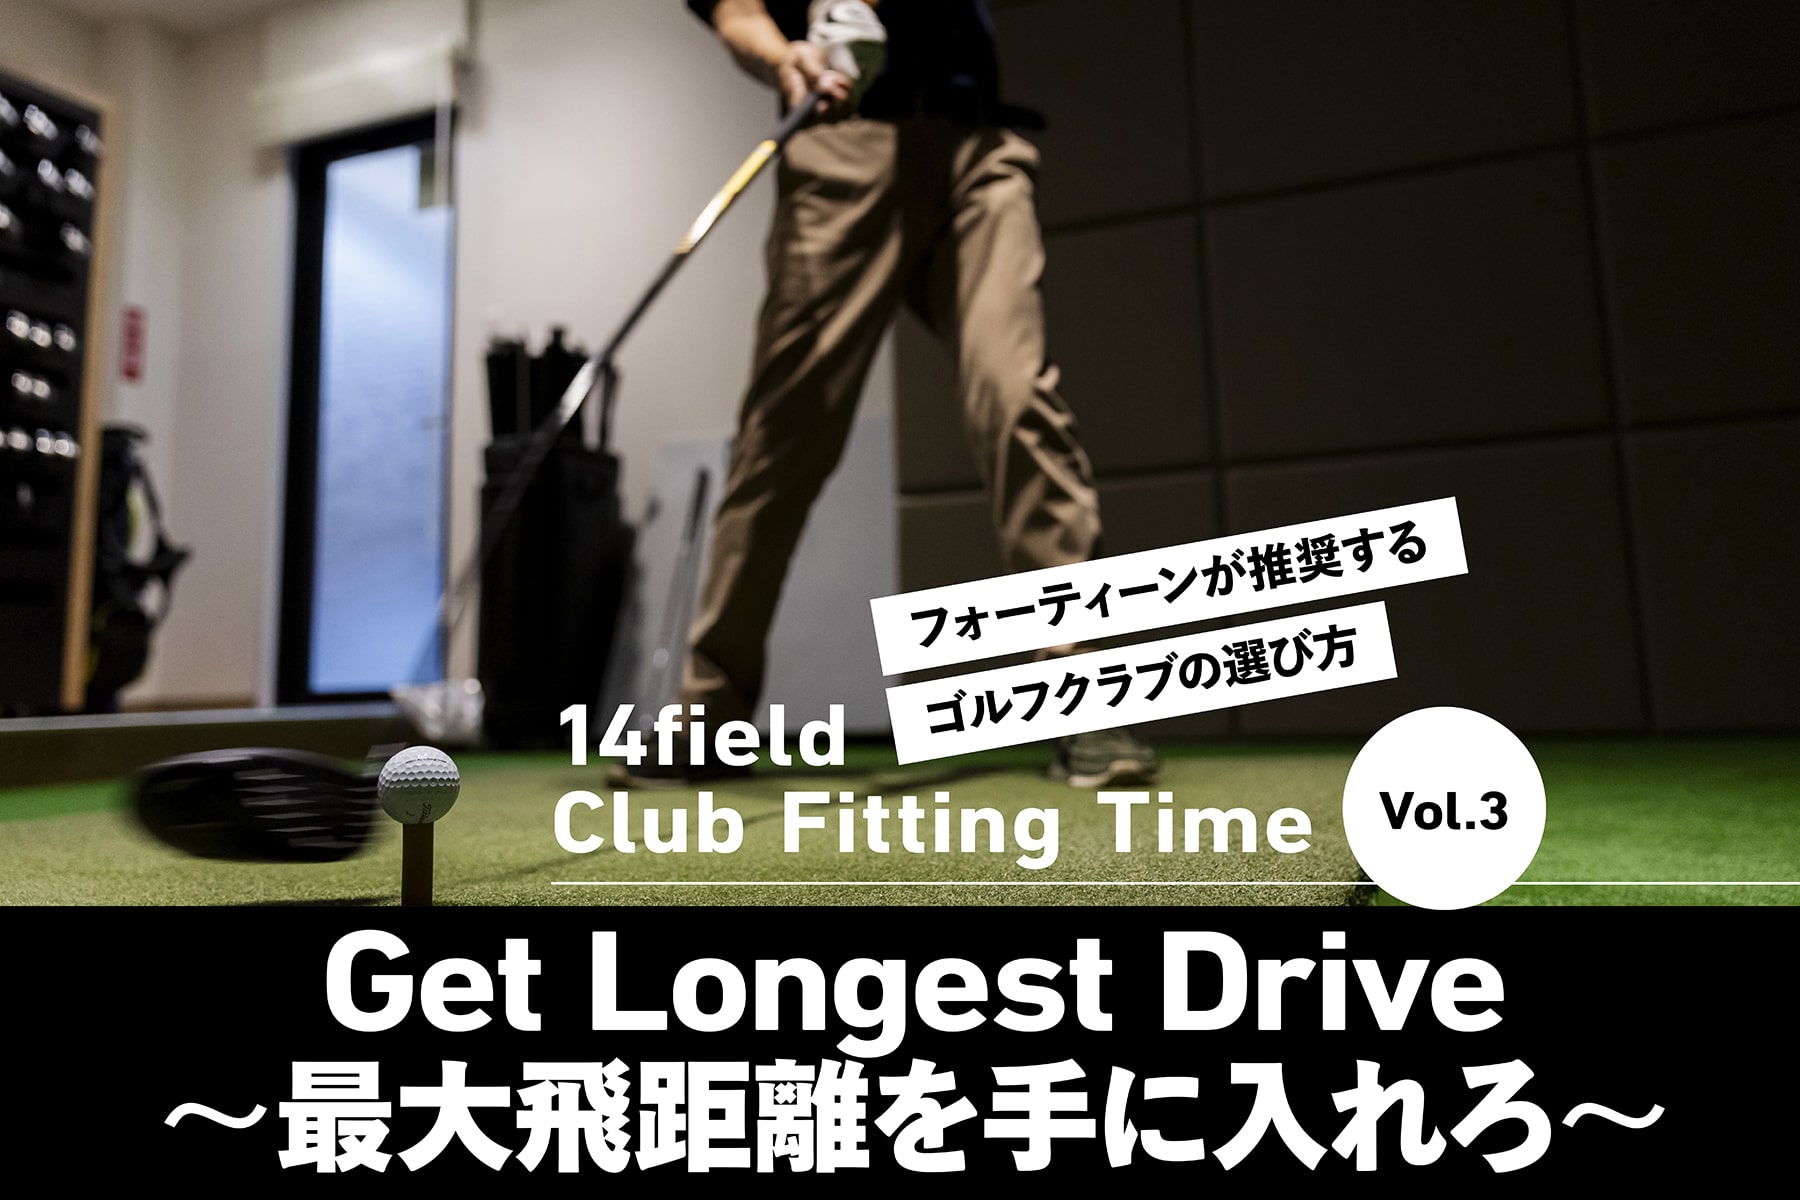 14field Club Fitting Time Vol.3
Get Longest Drive
〜最大飛距離を手に入れろ〜